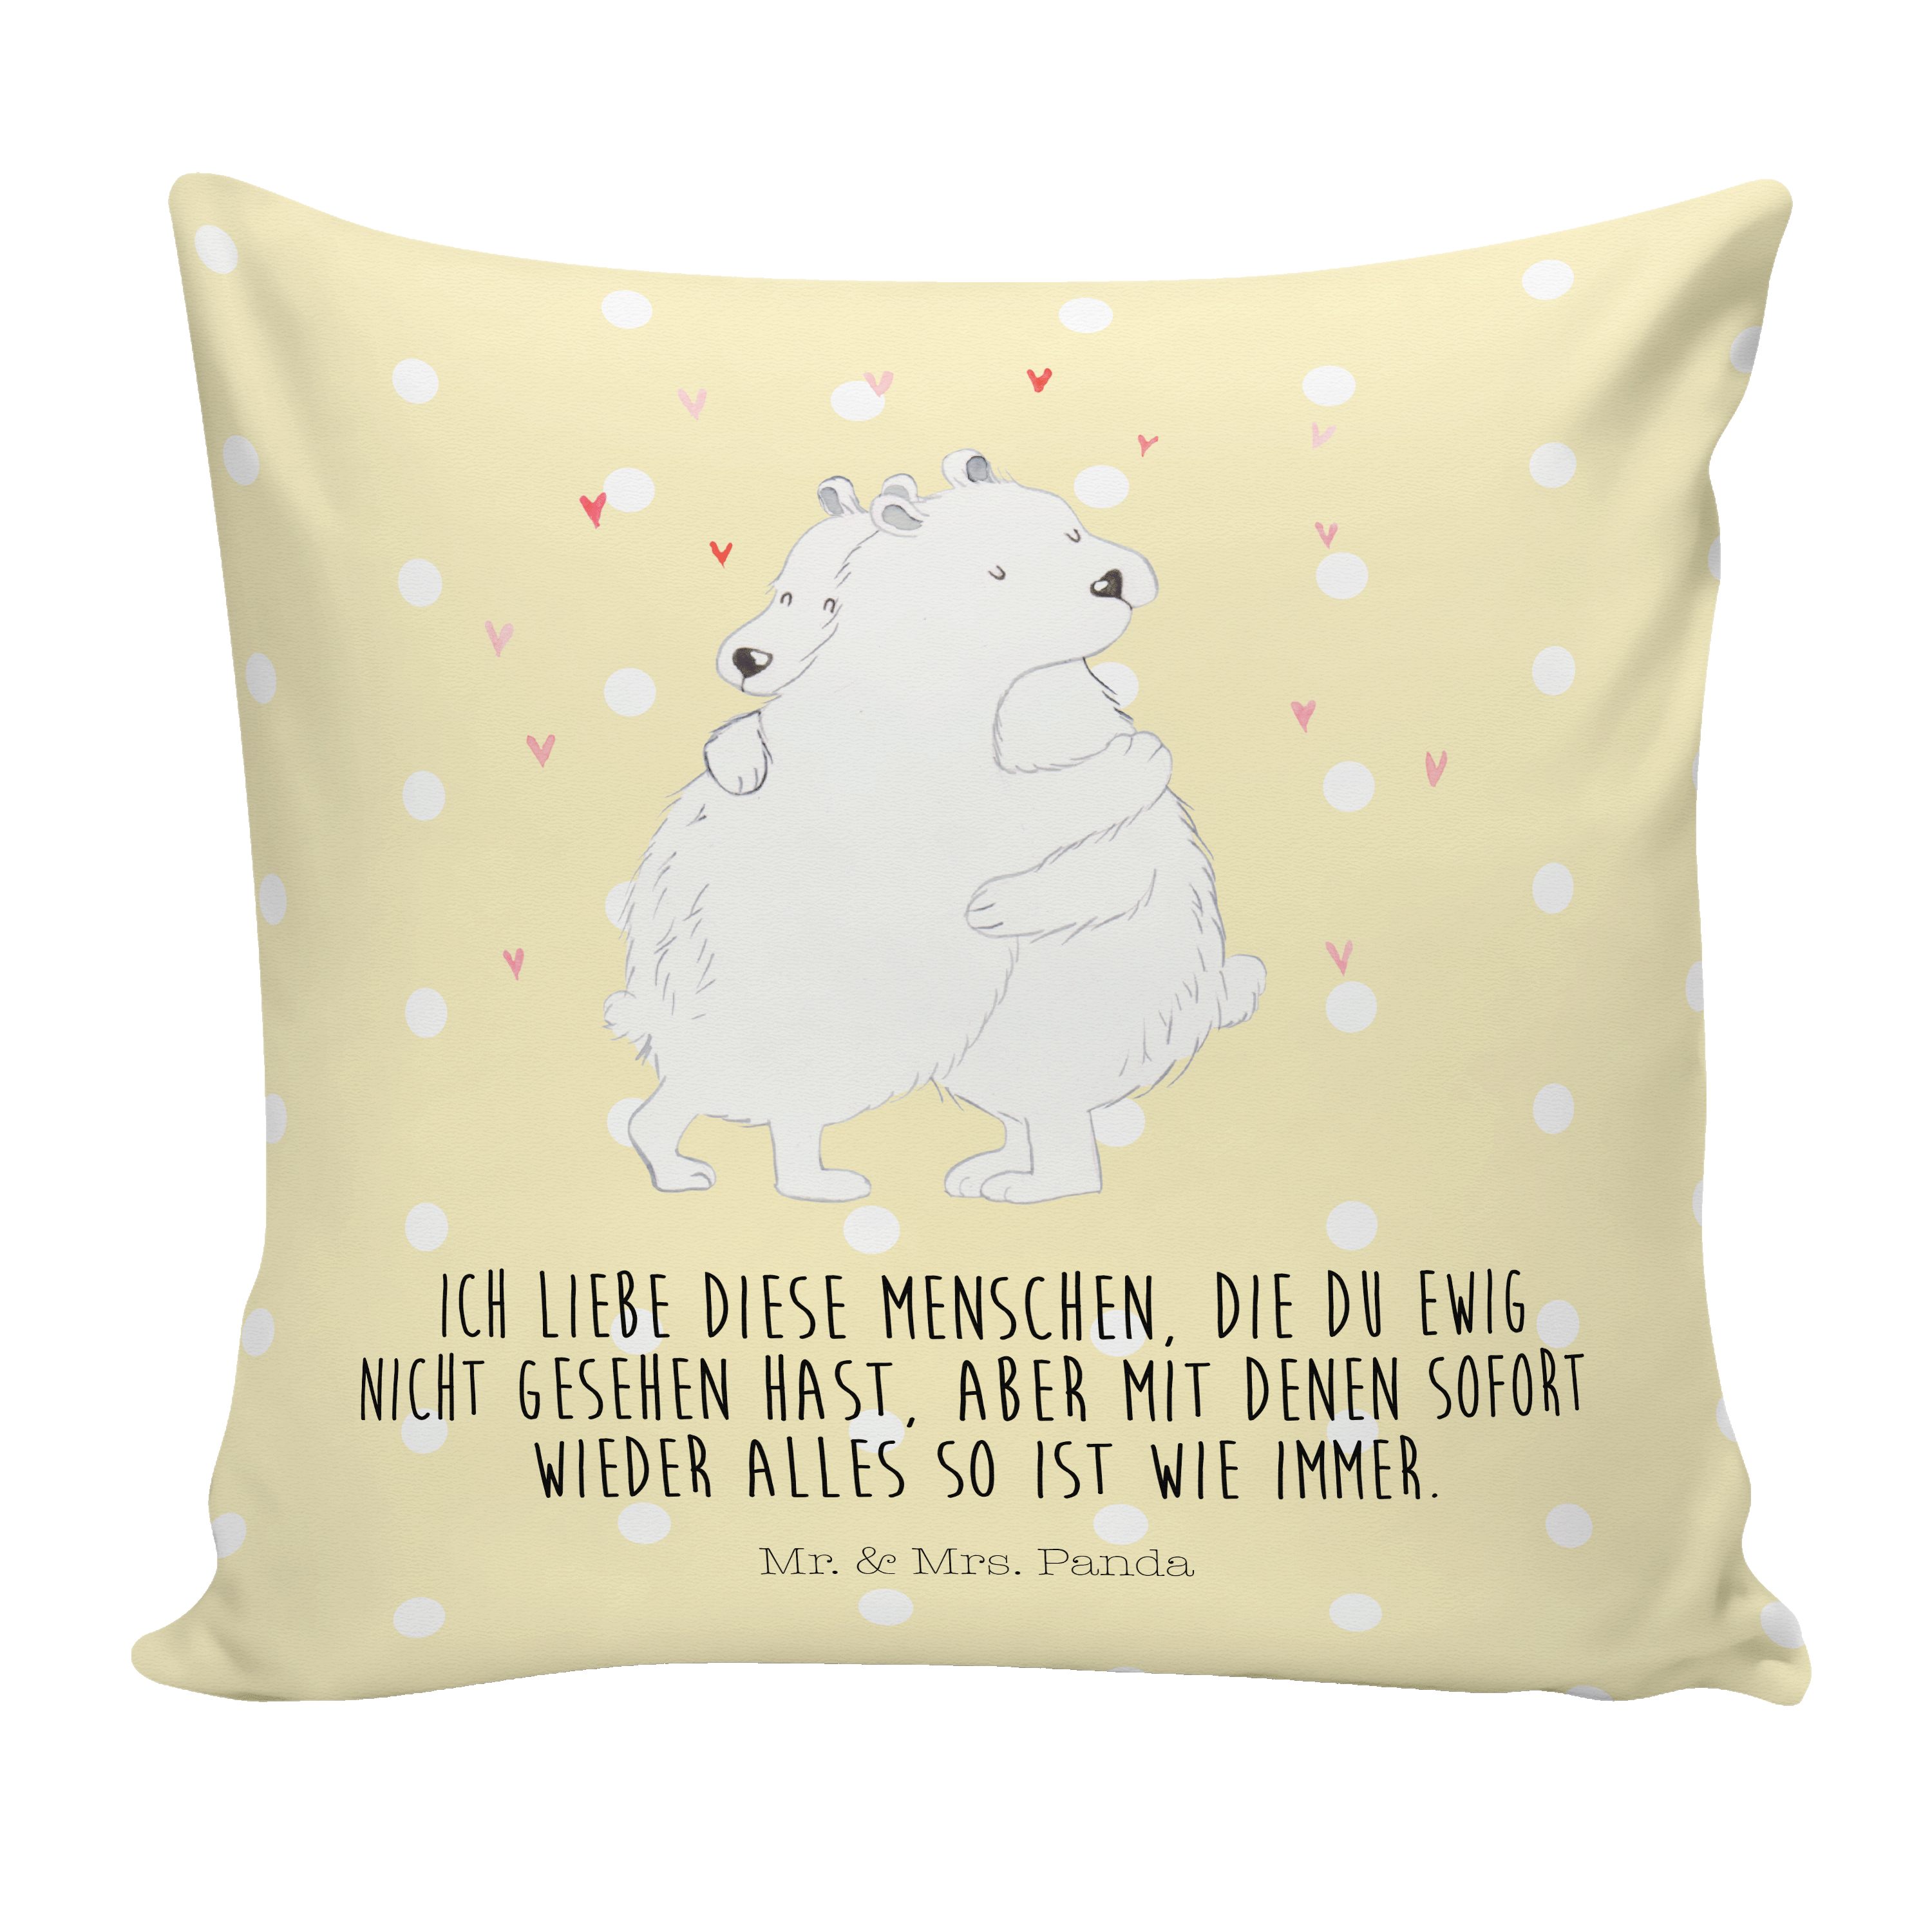 Mr. & Mrs. Panda Dekokissen Eisbär Umarmen - Gelb Pastell - Geschenk, Kissenhülle, süße Tiermotiv